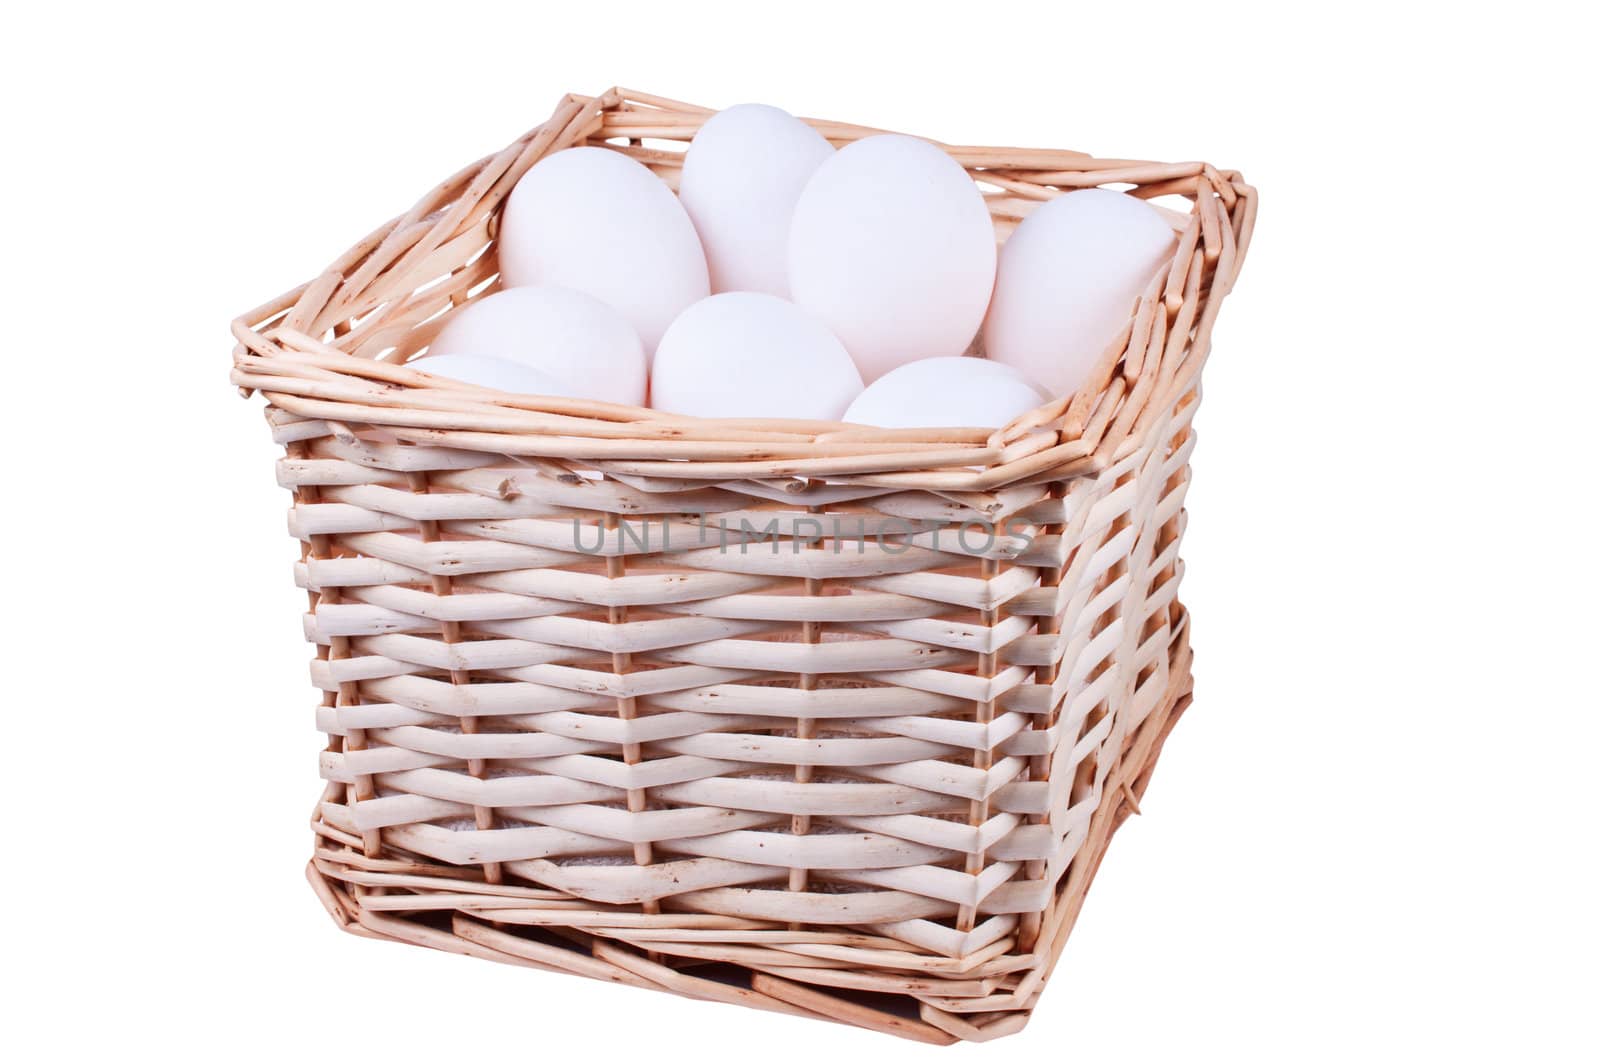 Wicker basket full of  chicken eggs  by Nanisimova